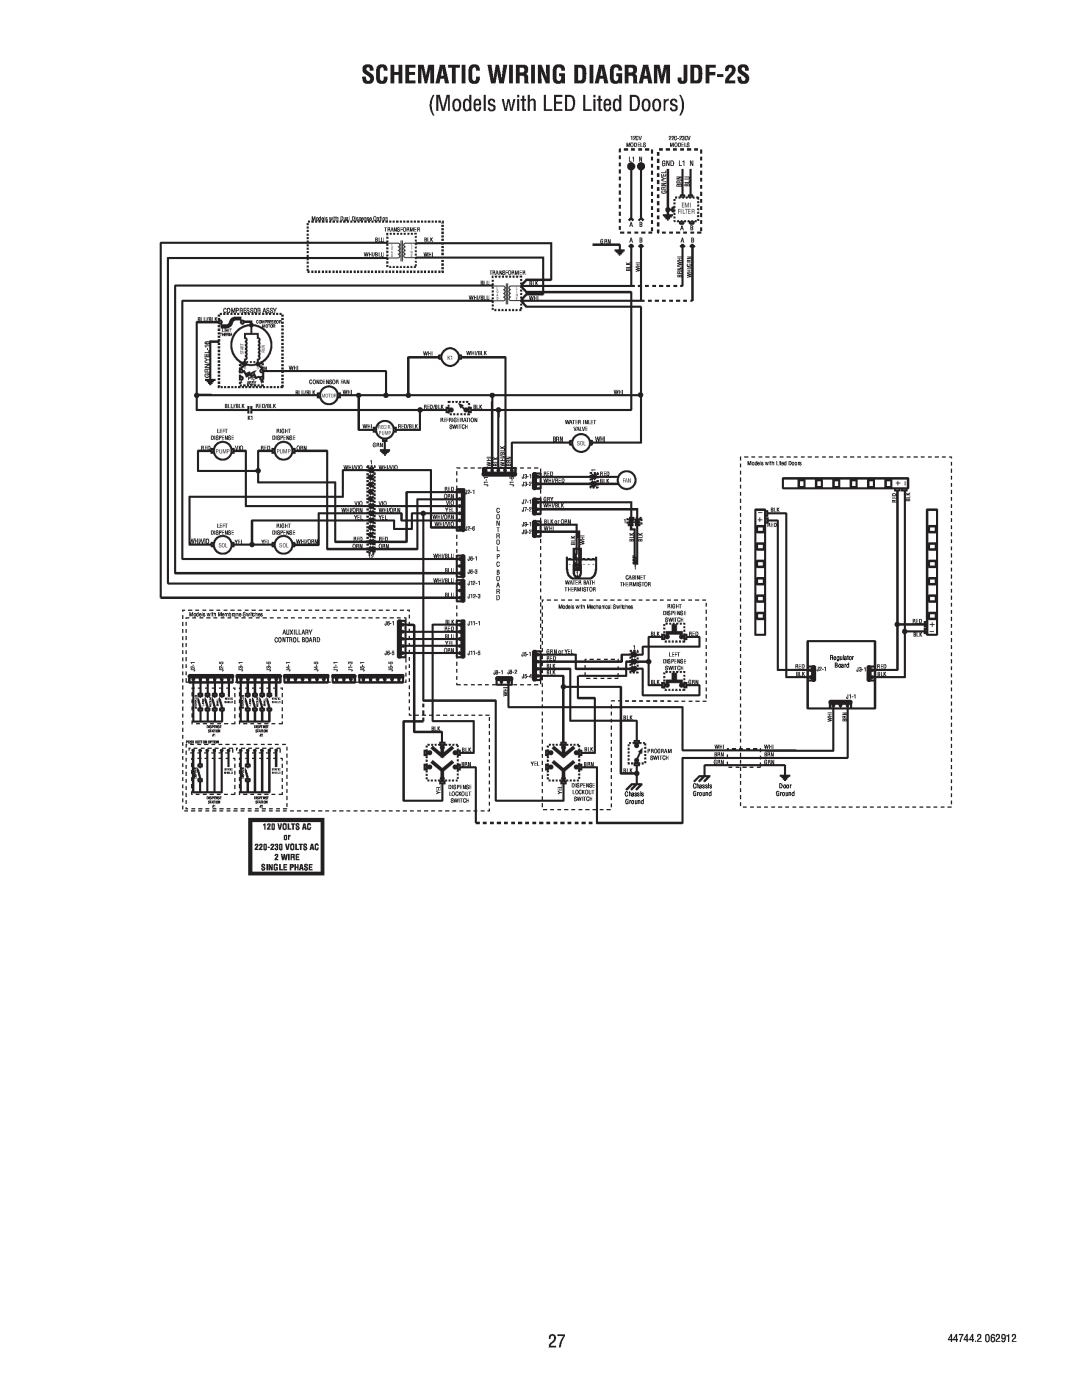 Bunn JDF-4S service manual SCHEMATIC WIRING DIAGRAM JDF-2S, 44744.2, Volts Ac, 220-230VOLTS AC, Wire, Single Phase 